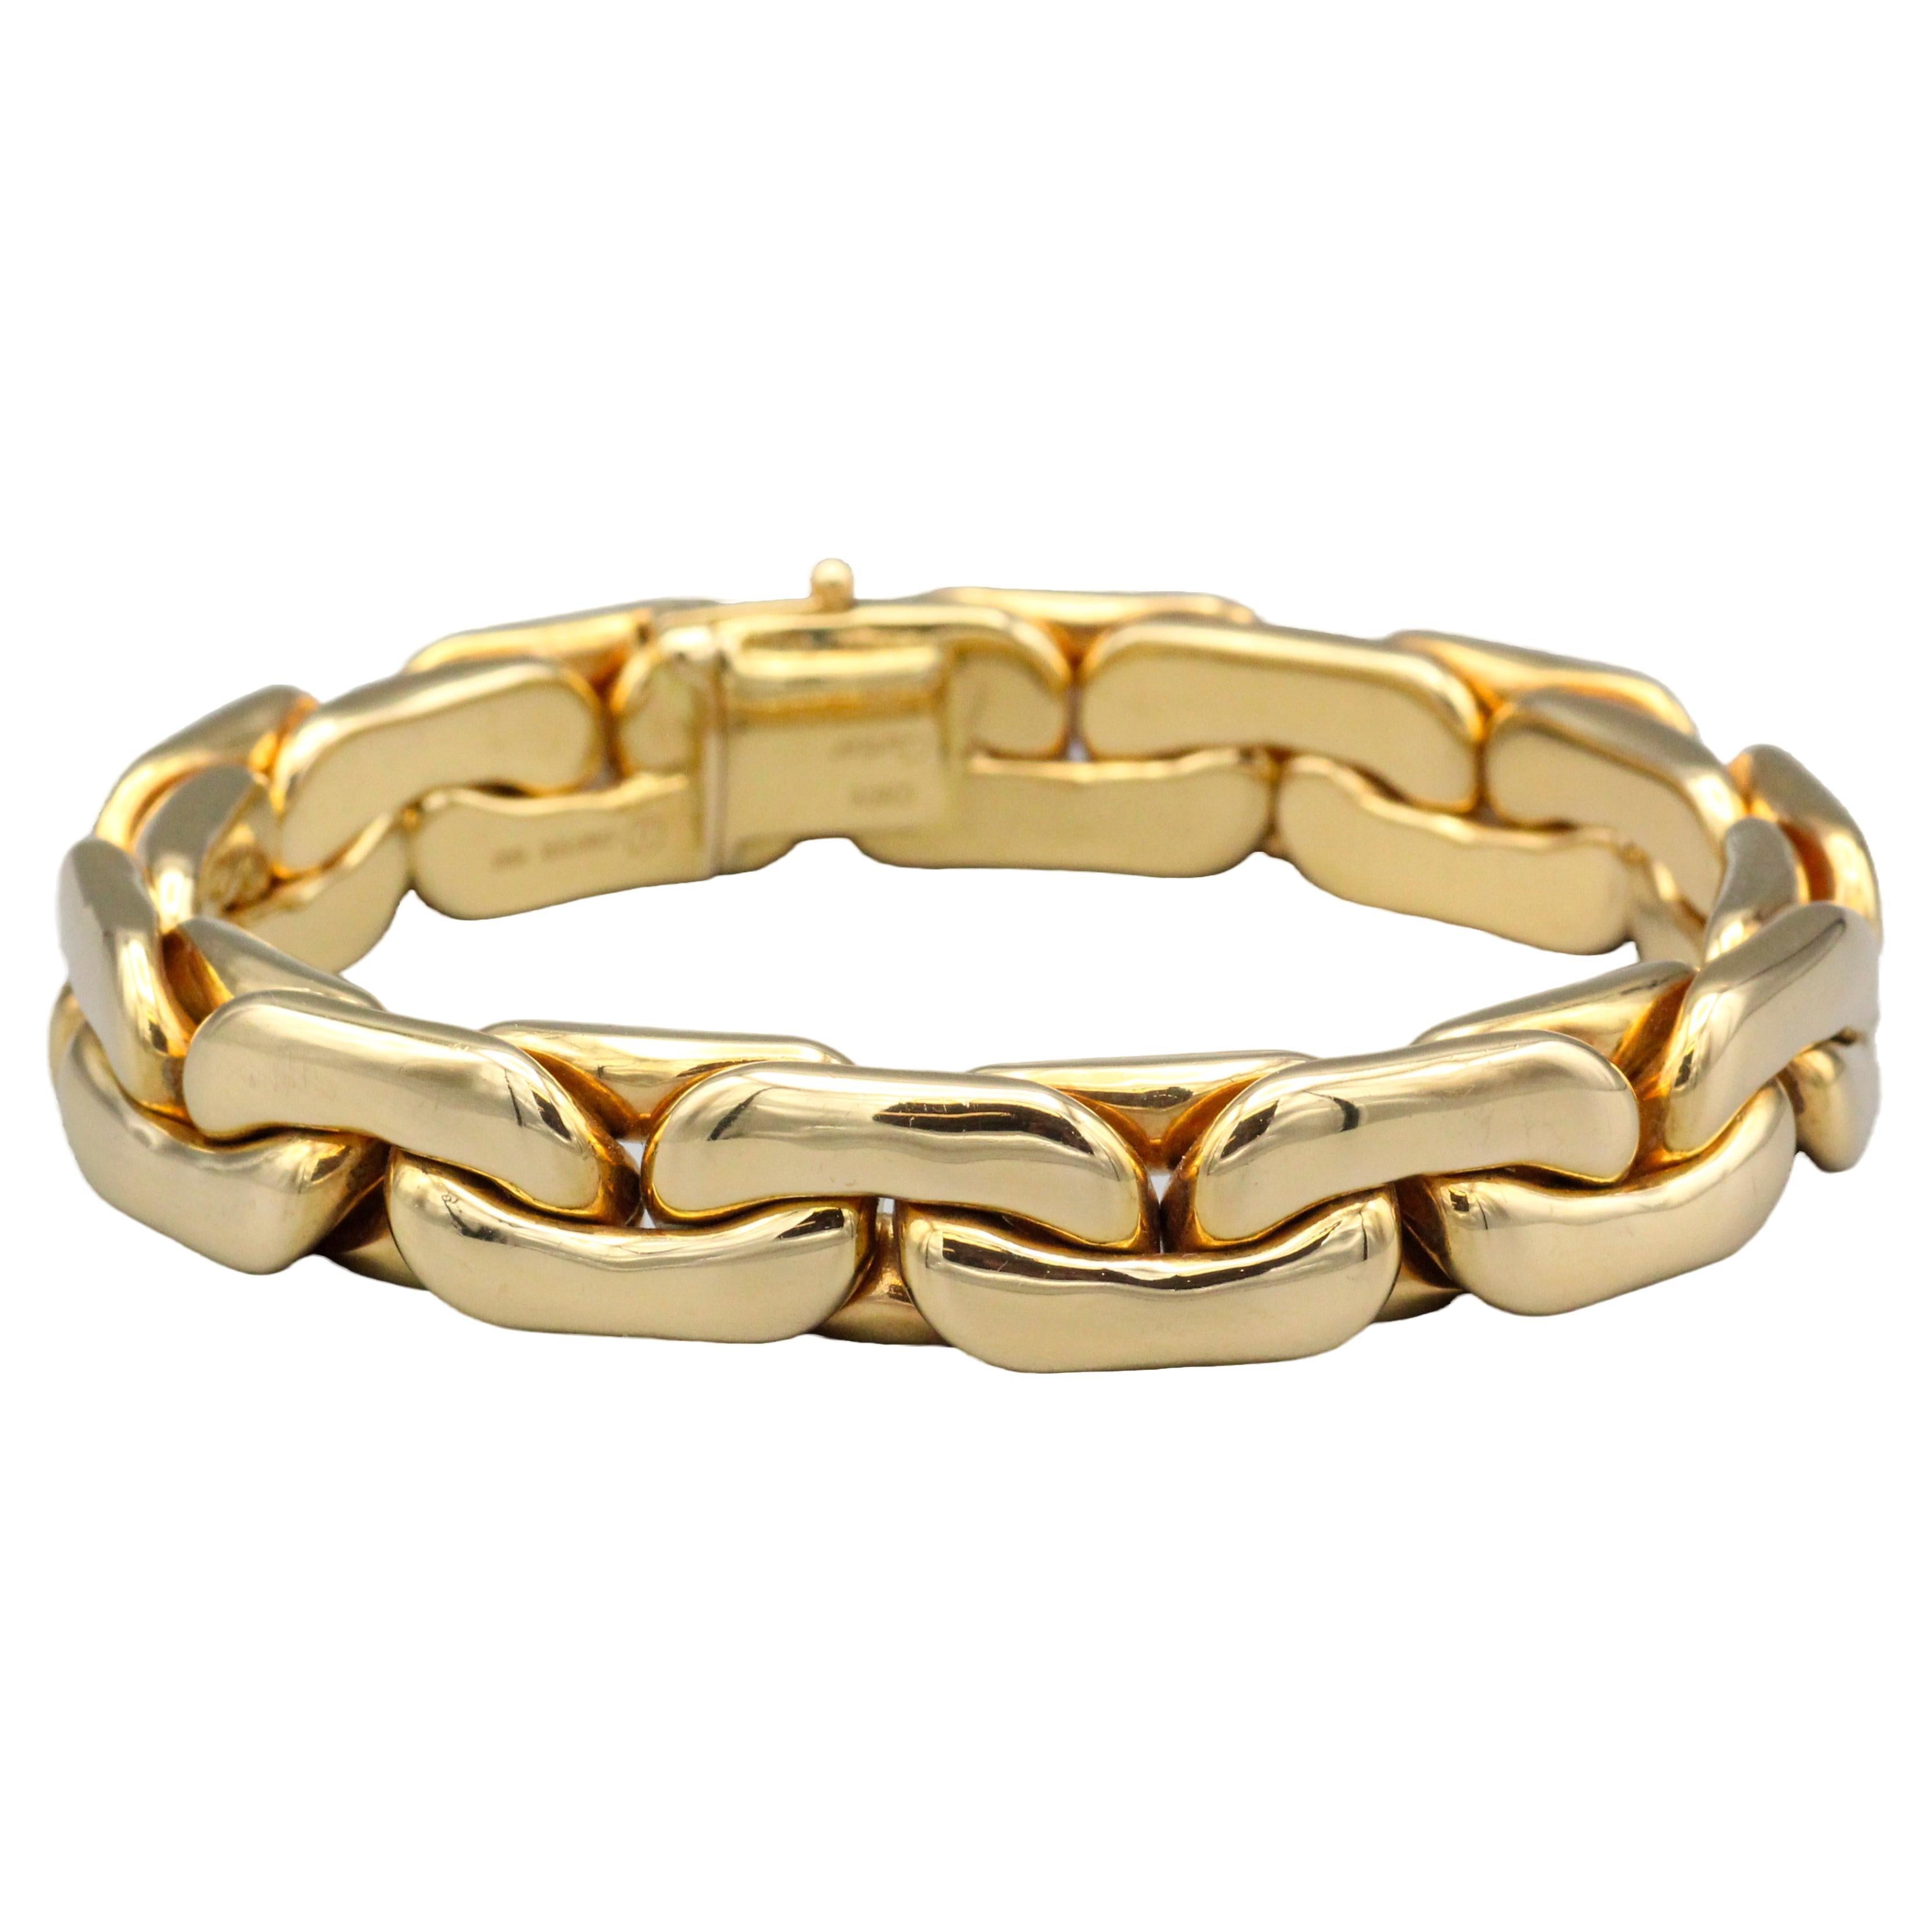 Cartier 18k Gold Elongated Curb Link Bracelet